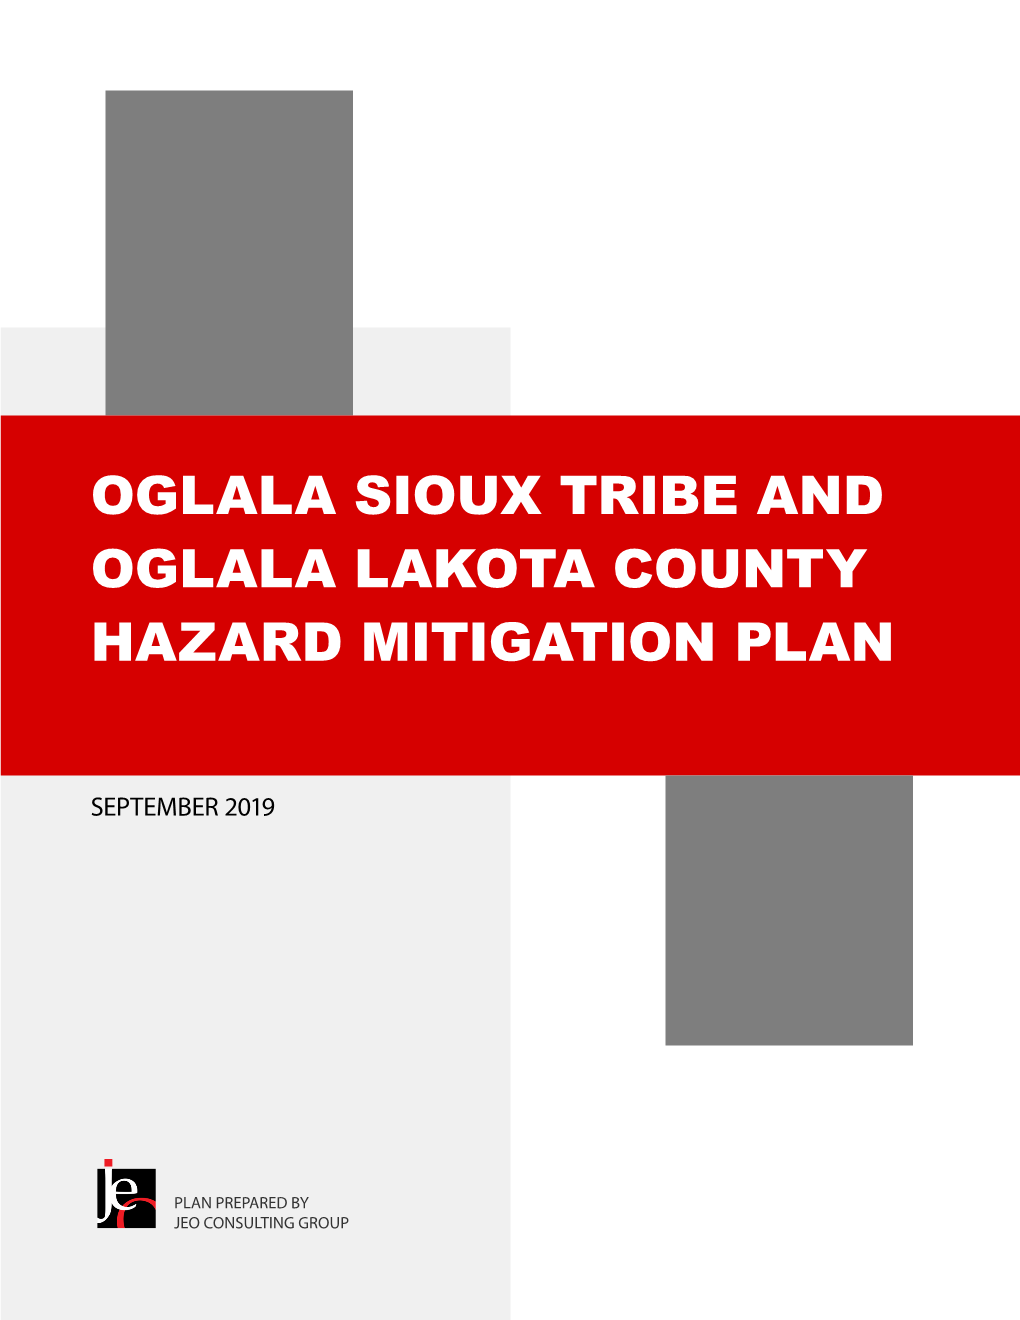 Oglala Sioux Tribe and Oglala Lakota County Hazard Mitigation Plan